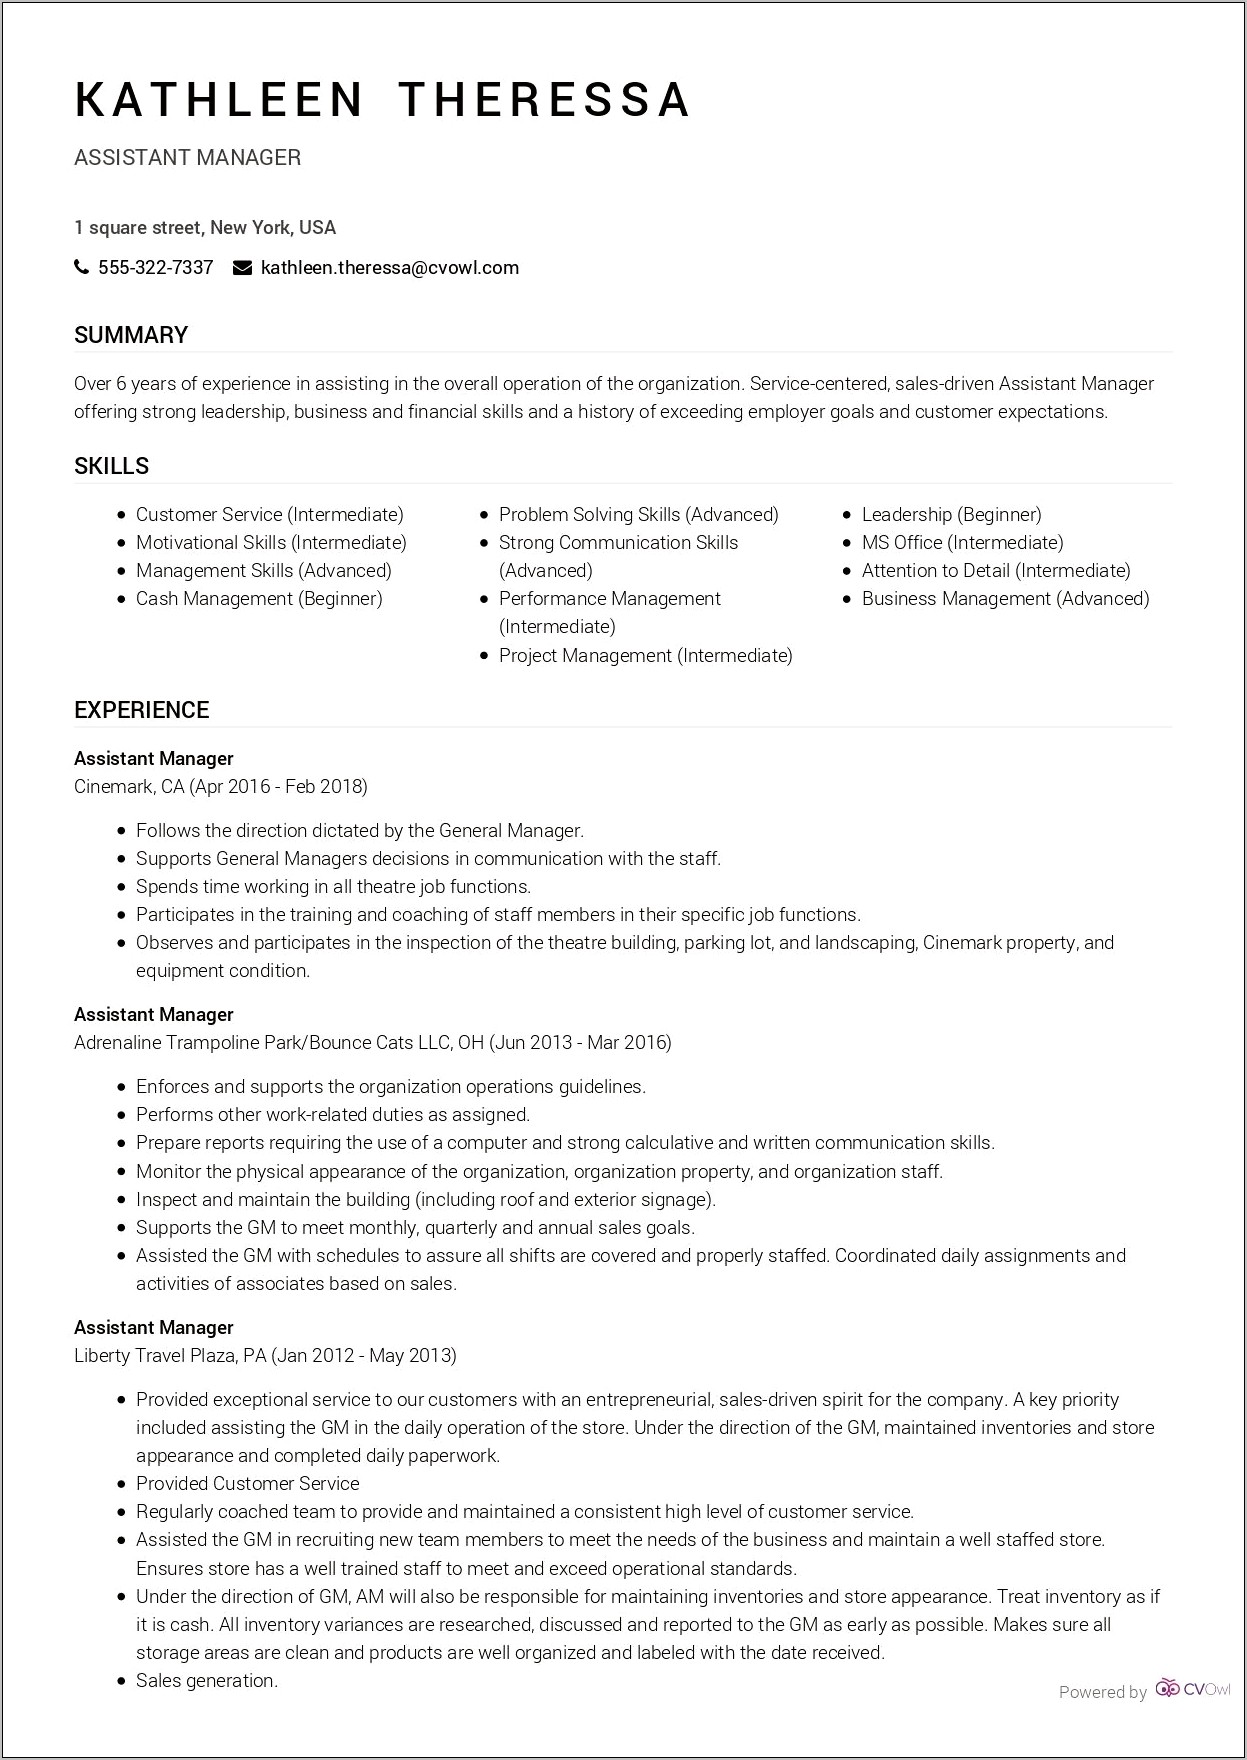 Assistant Manager Finance Resume Format